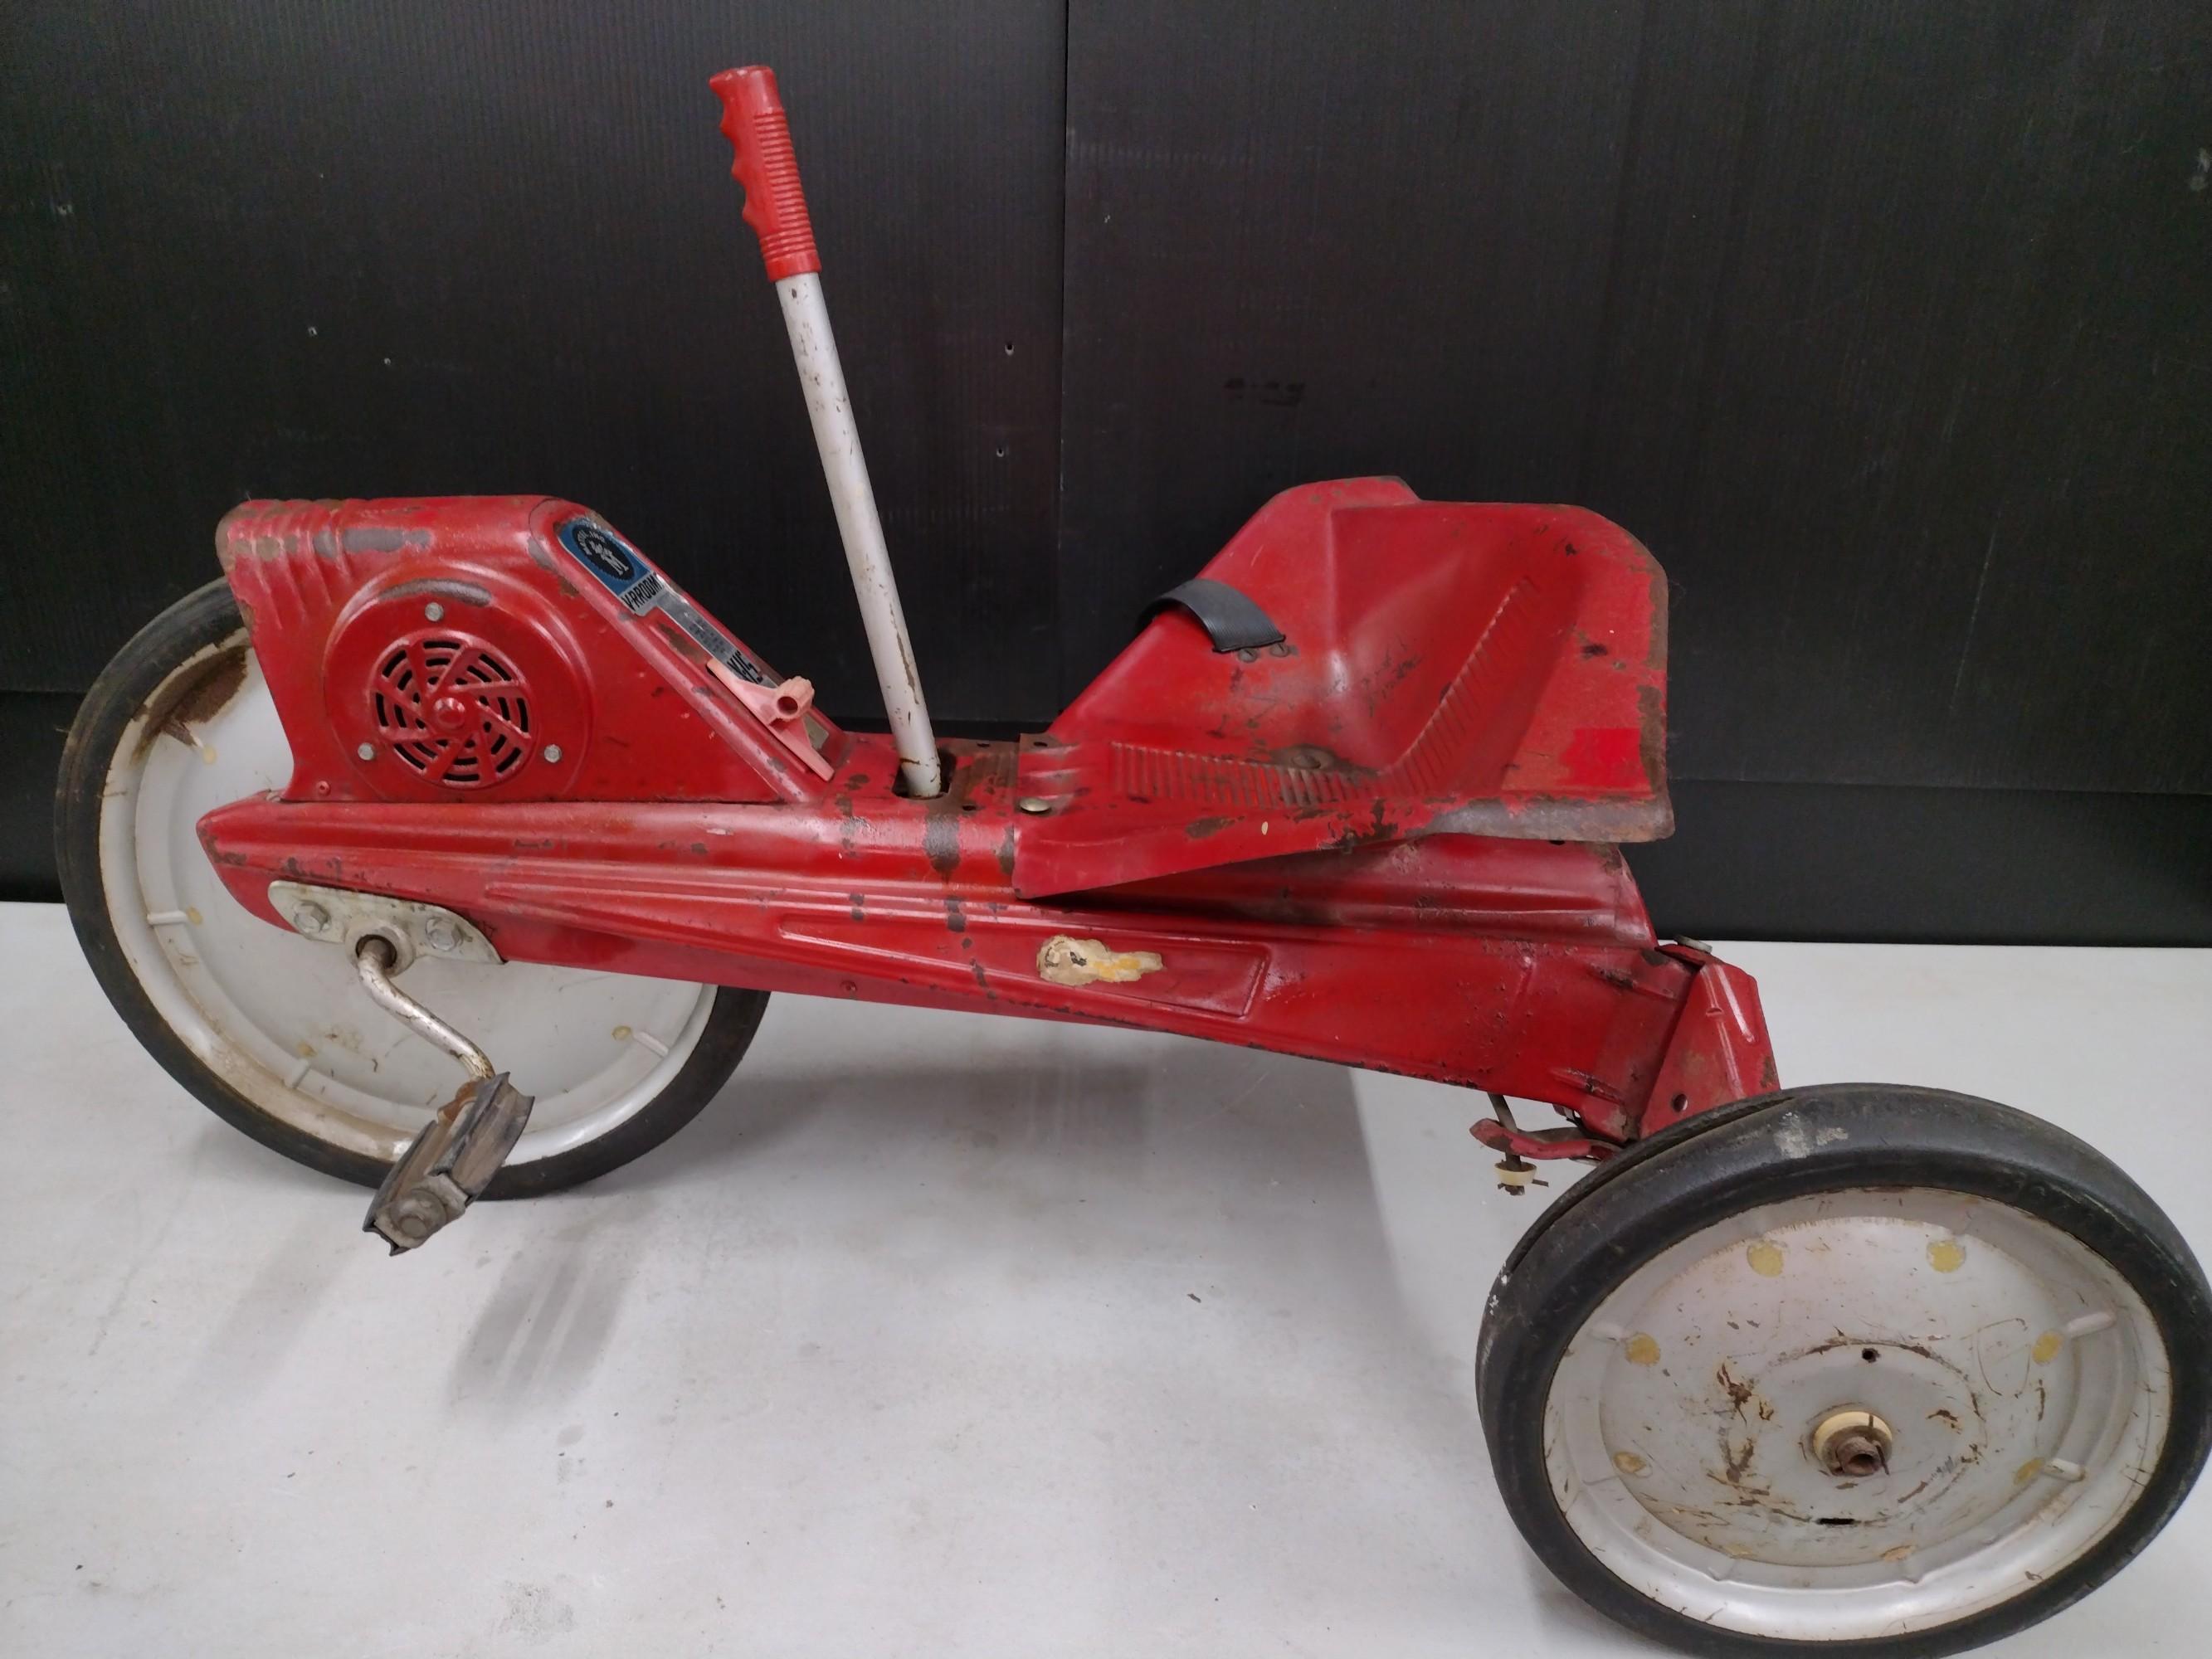 Mattel Stick Steer Pedal Car